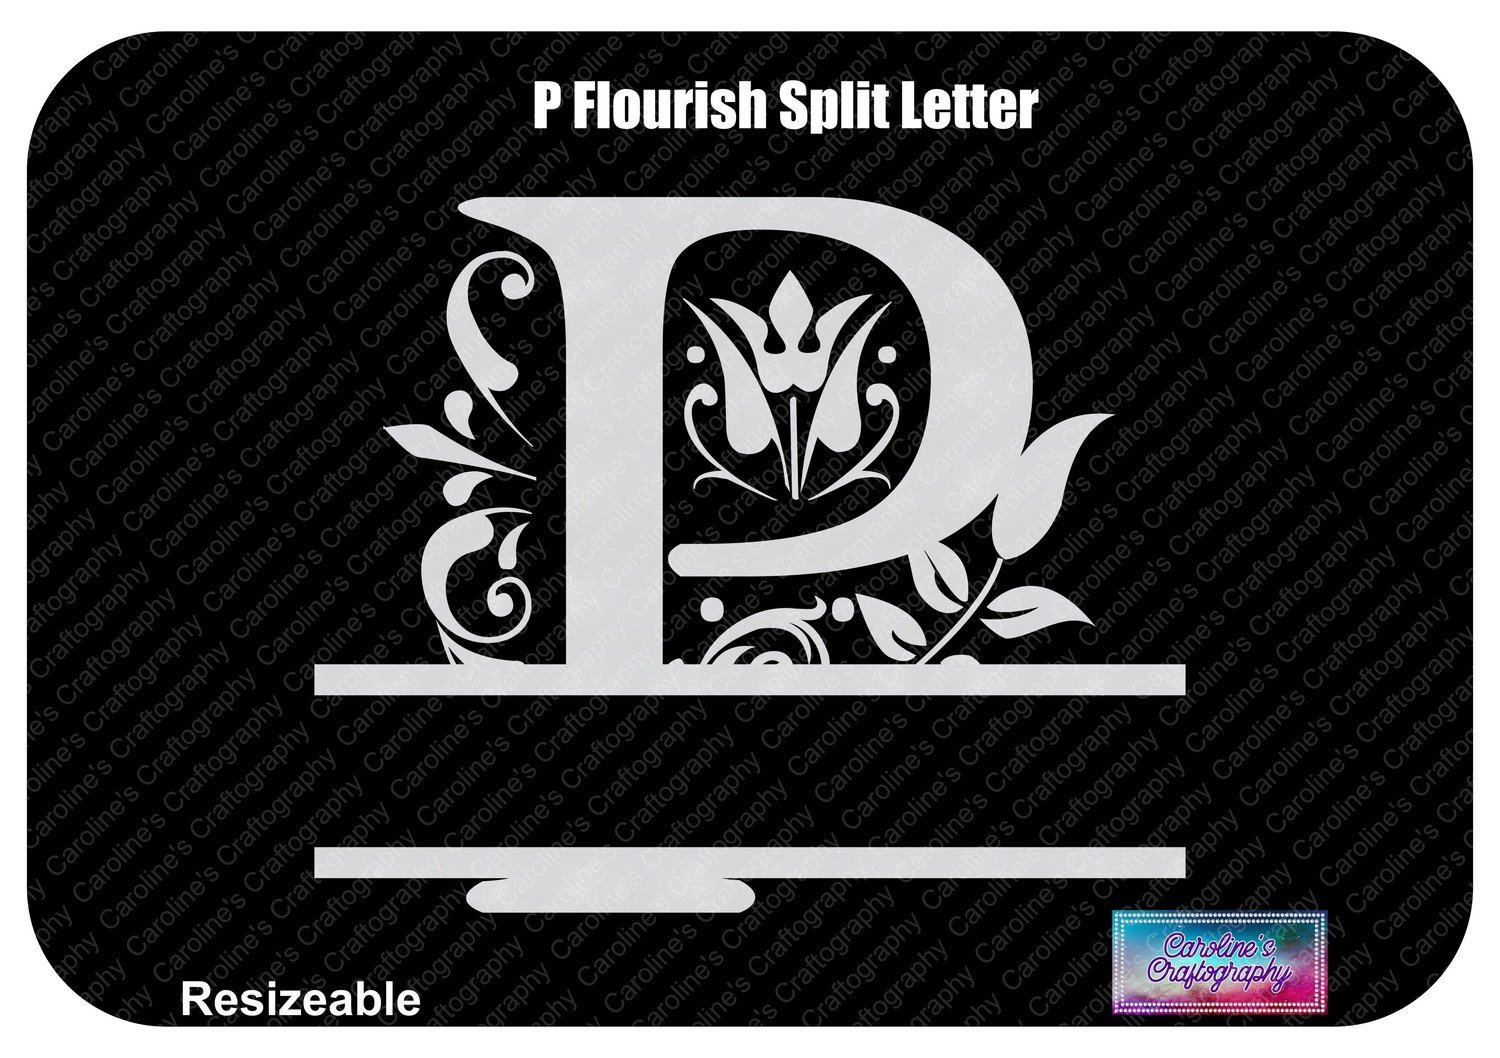 P Flourish Split Letter